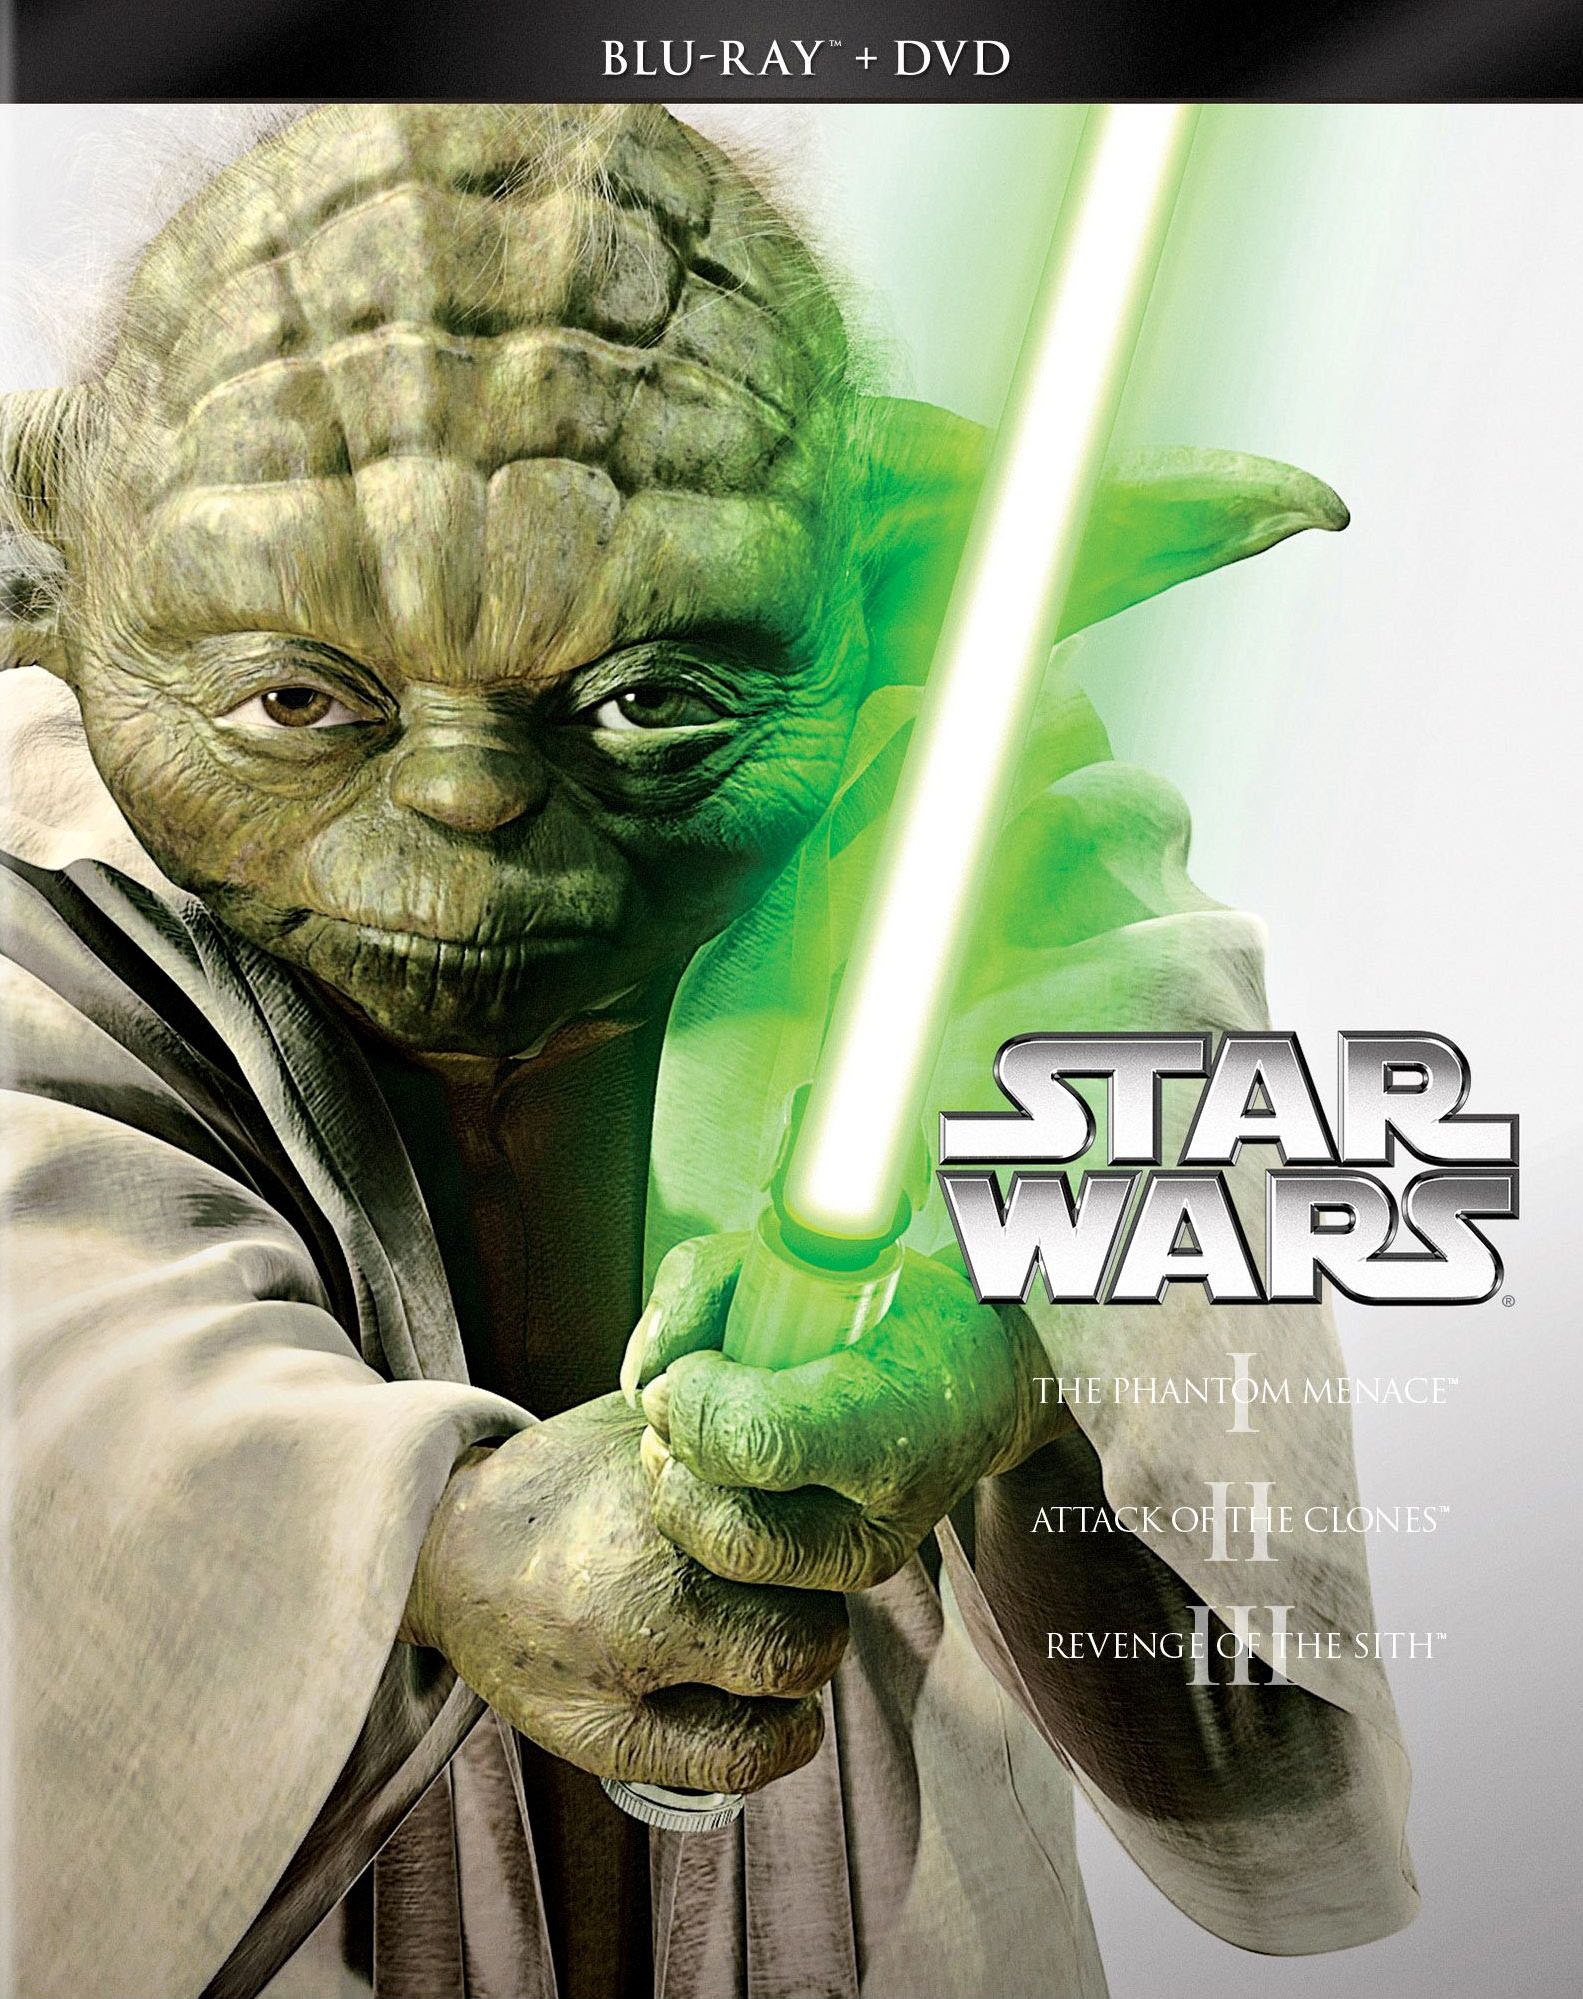 Best Buy: Star Wars: The Skywalker Saga [Digital Copy] [4K Ultra HD  Blu-ray/Blu-ray] [Only @ Best Buy]